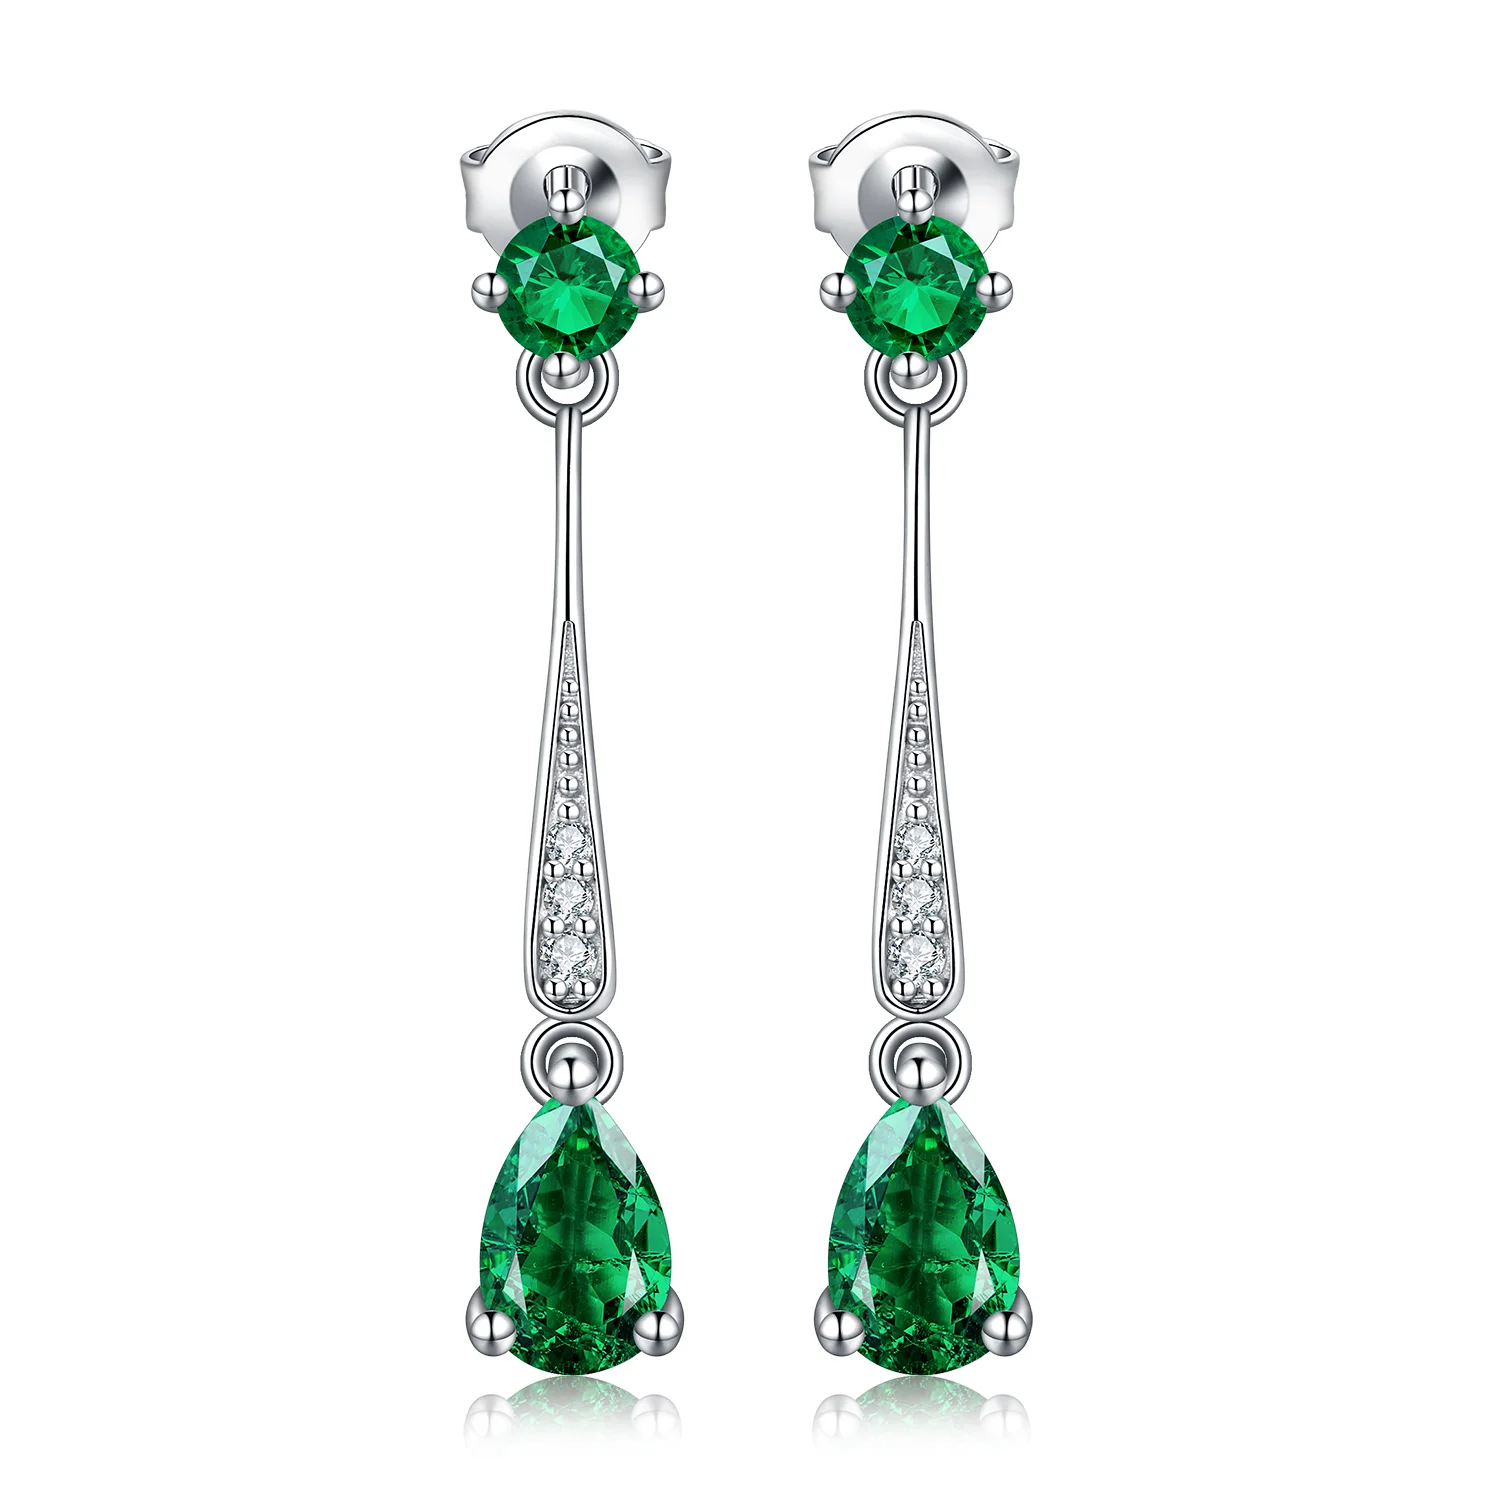 

Anster 925 Sterling Silver Earrings Jewelry High Quality Lab Grown Zambia Emerald eardrop 2021, Green